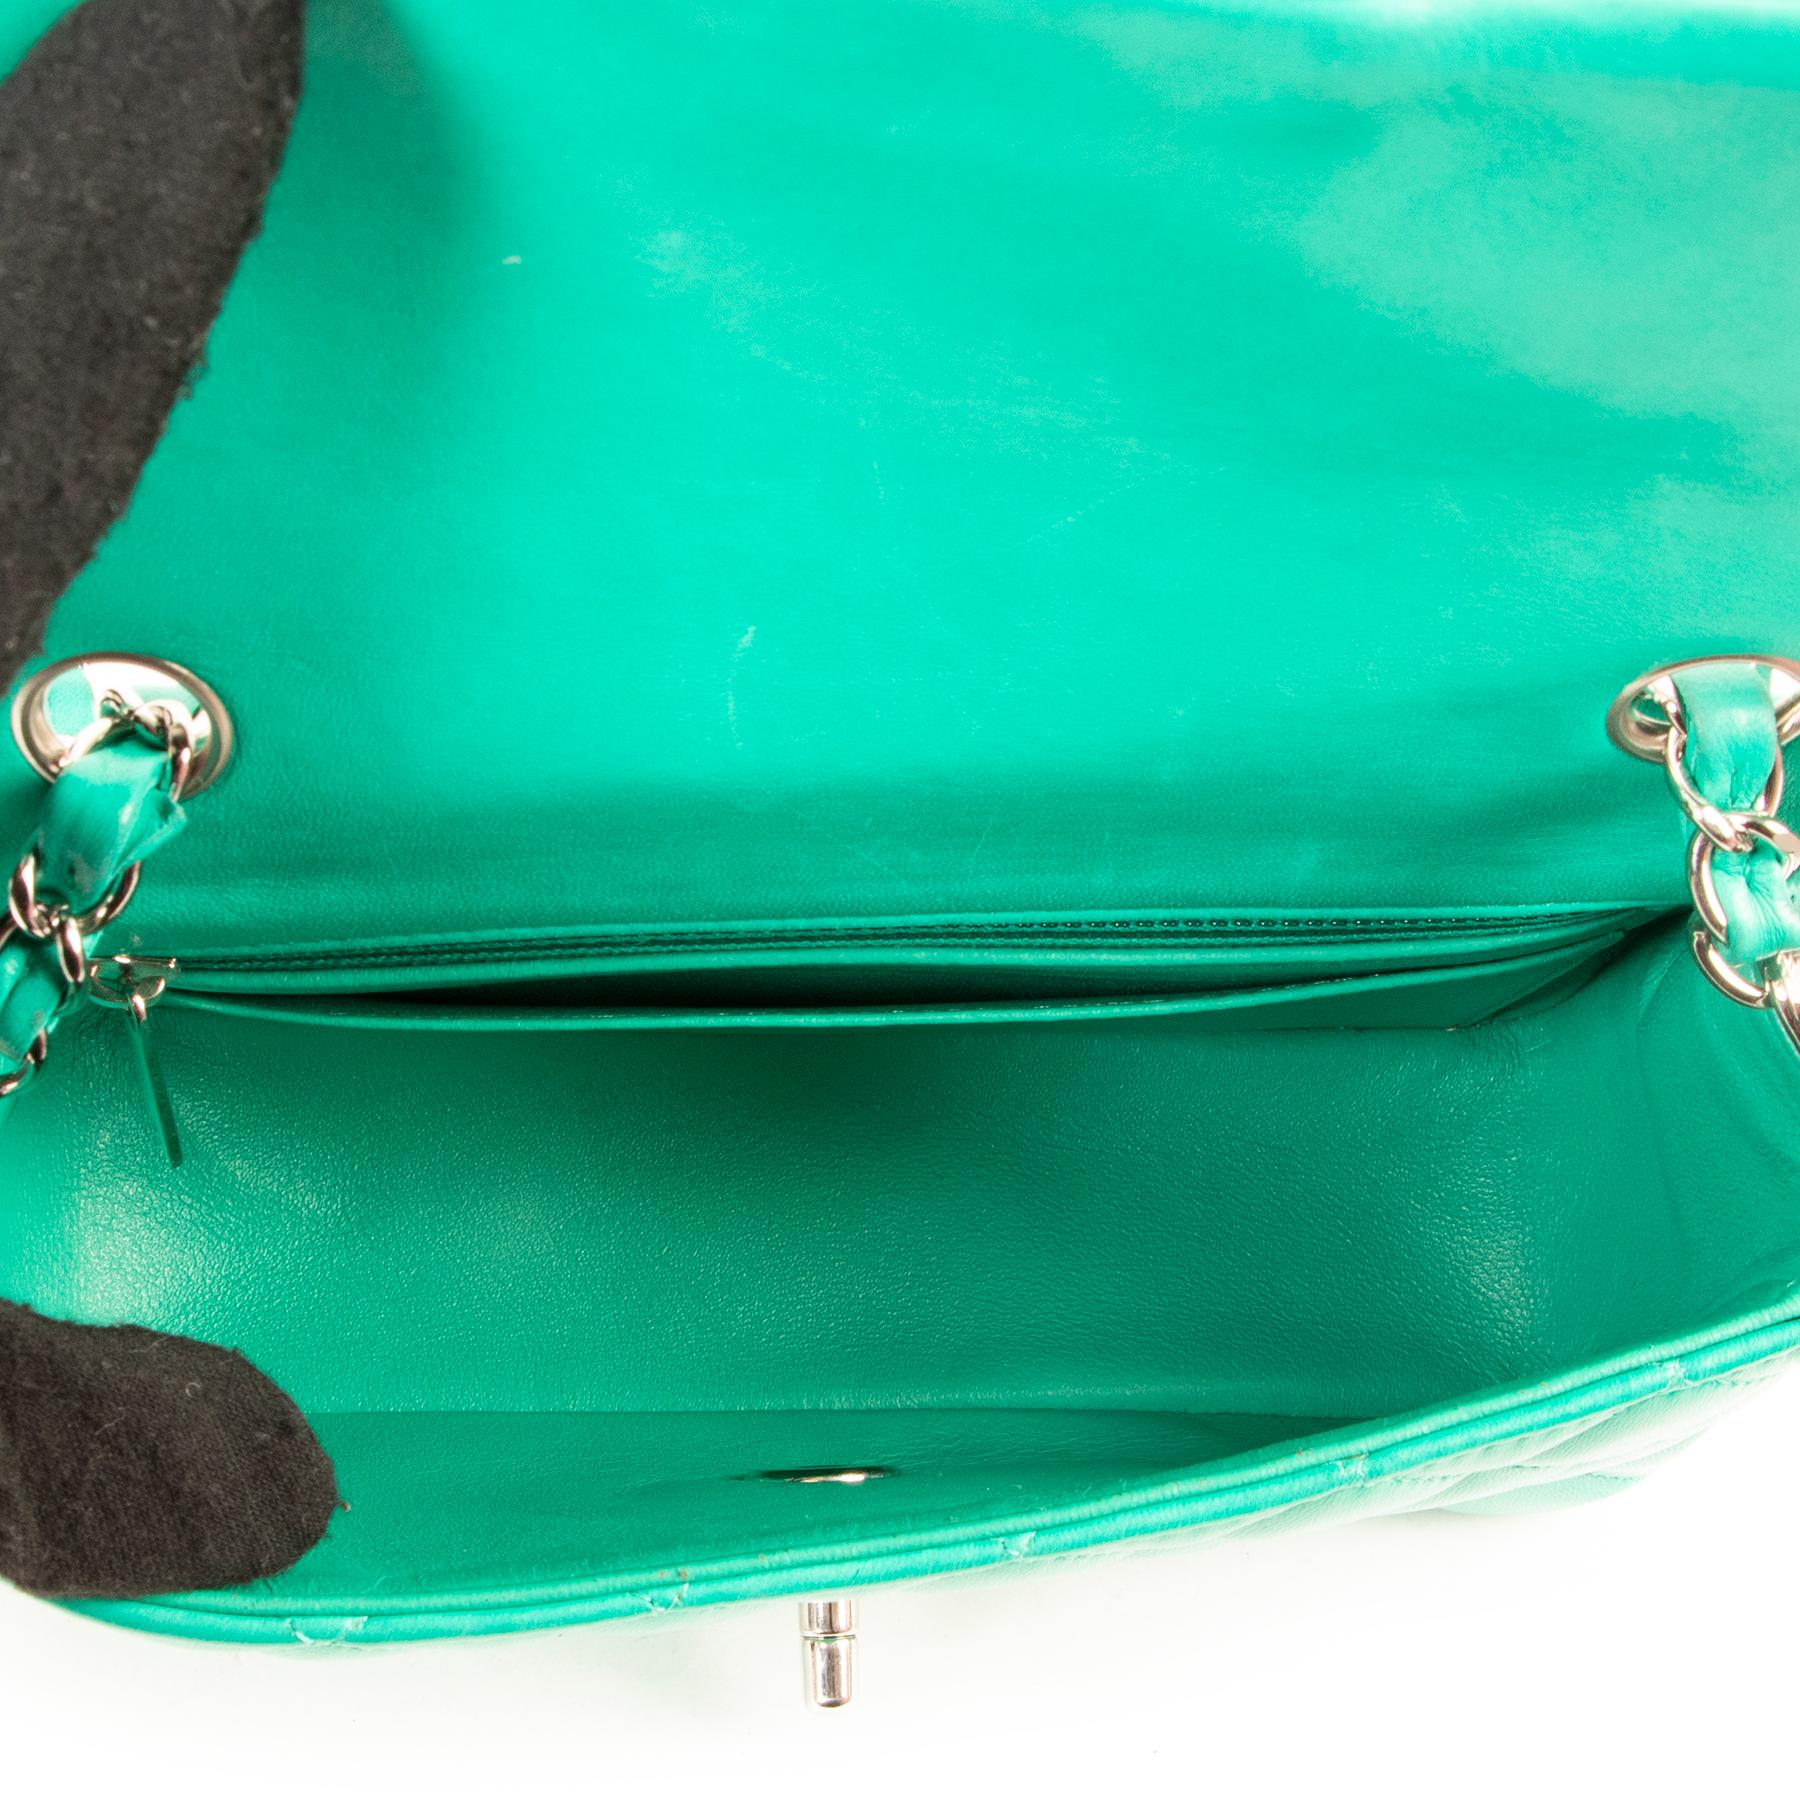 chanel green classic flap bag